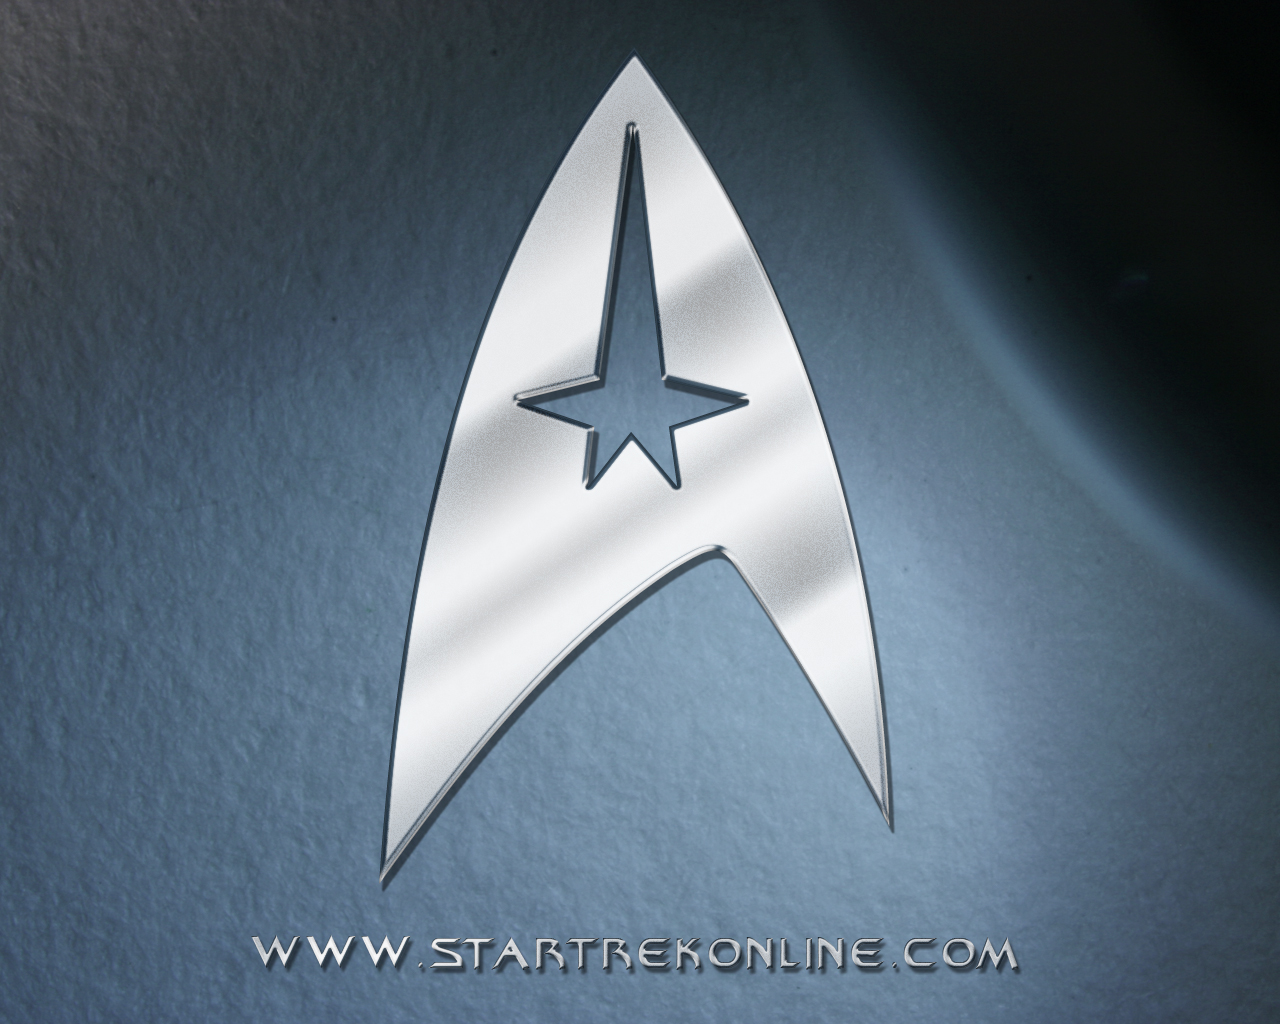 Star Trek Online Wallpaper by imaximus on DeviantArt